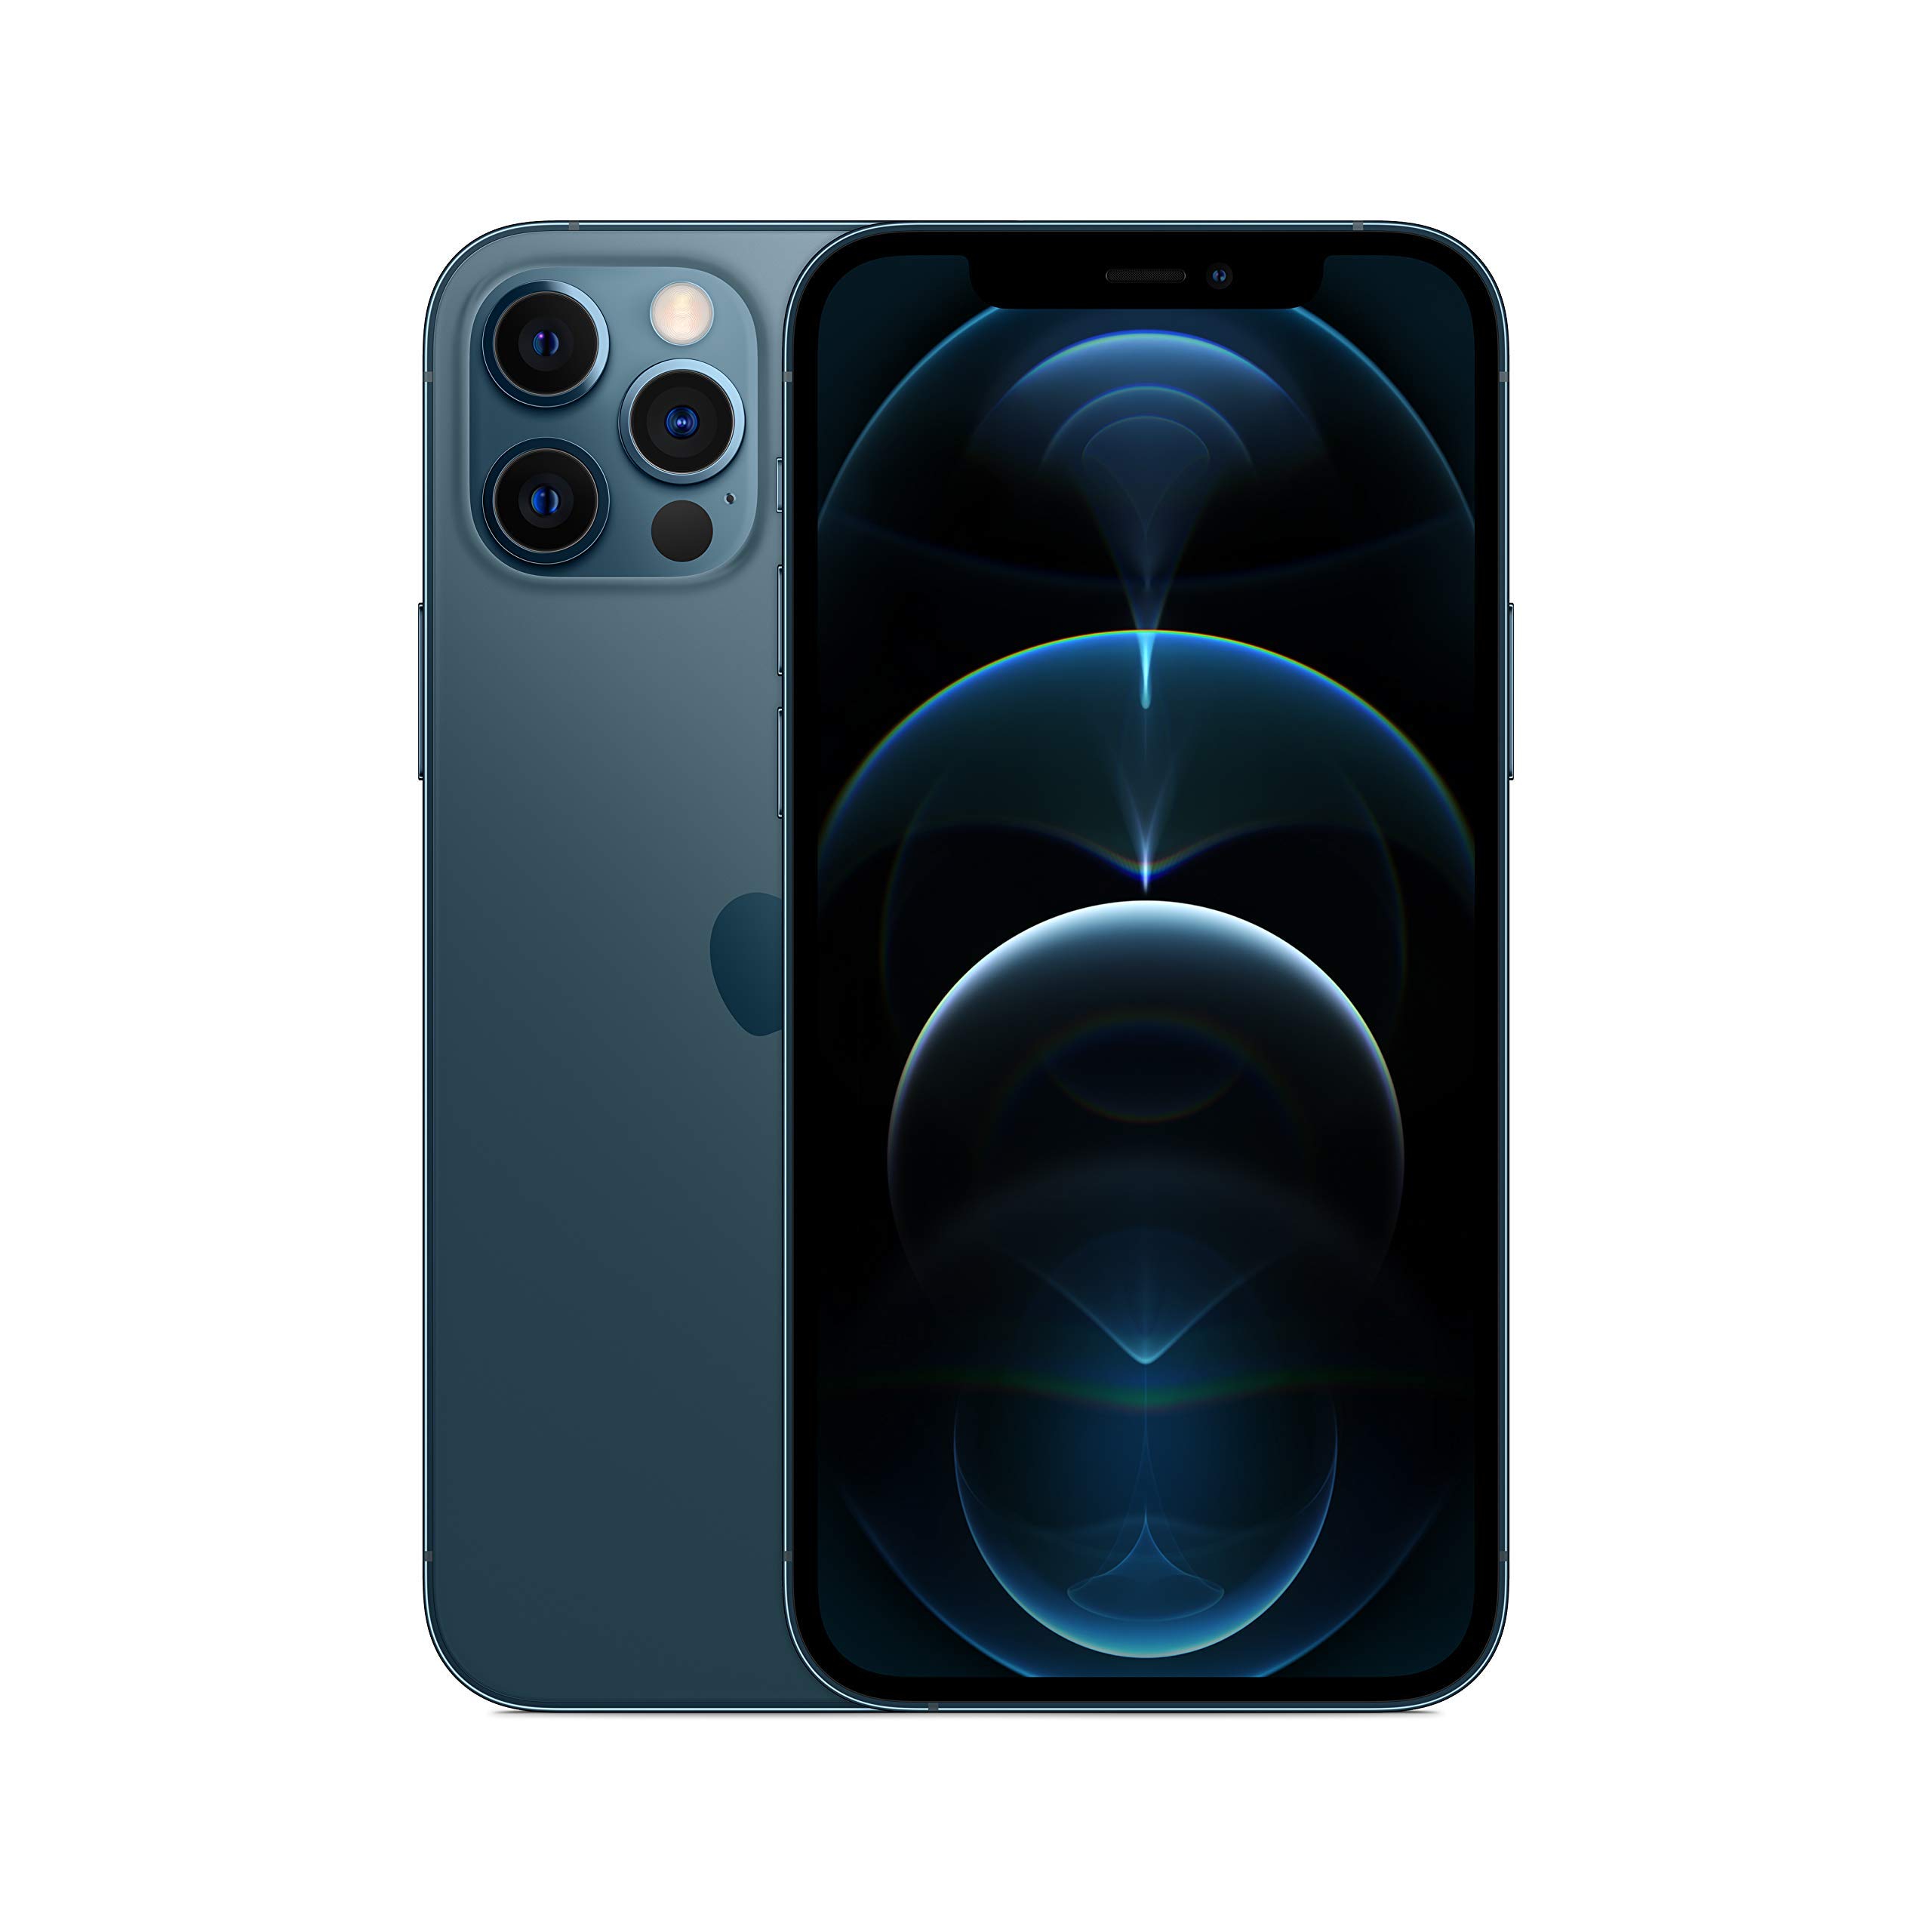 Apple iPhone 12 Pro, 512GB, Pazifikblau - (Generalüberholt)